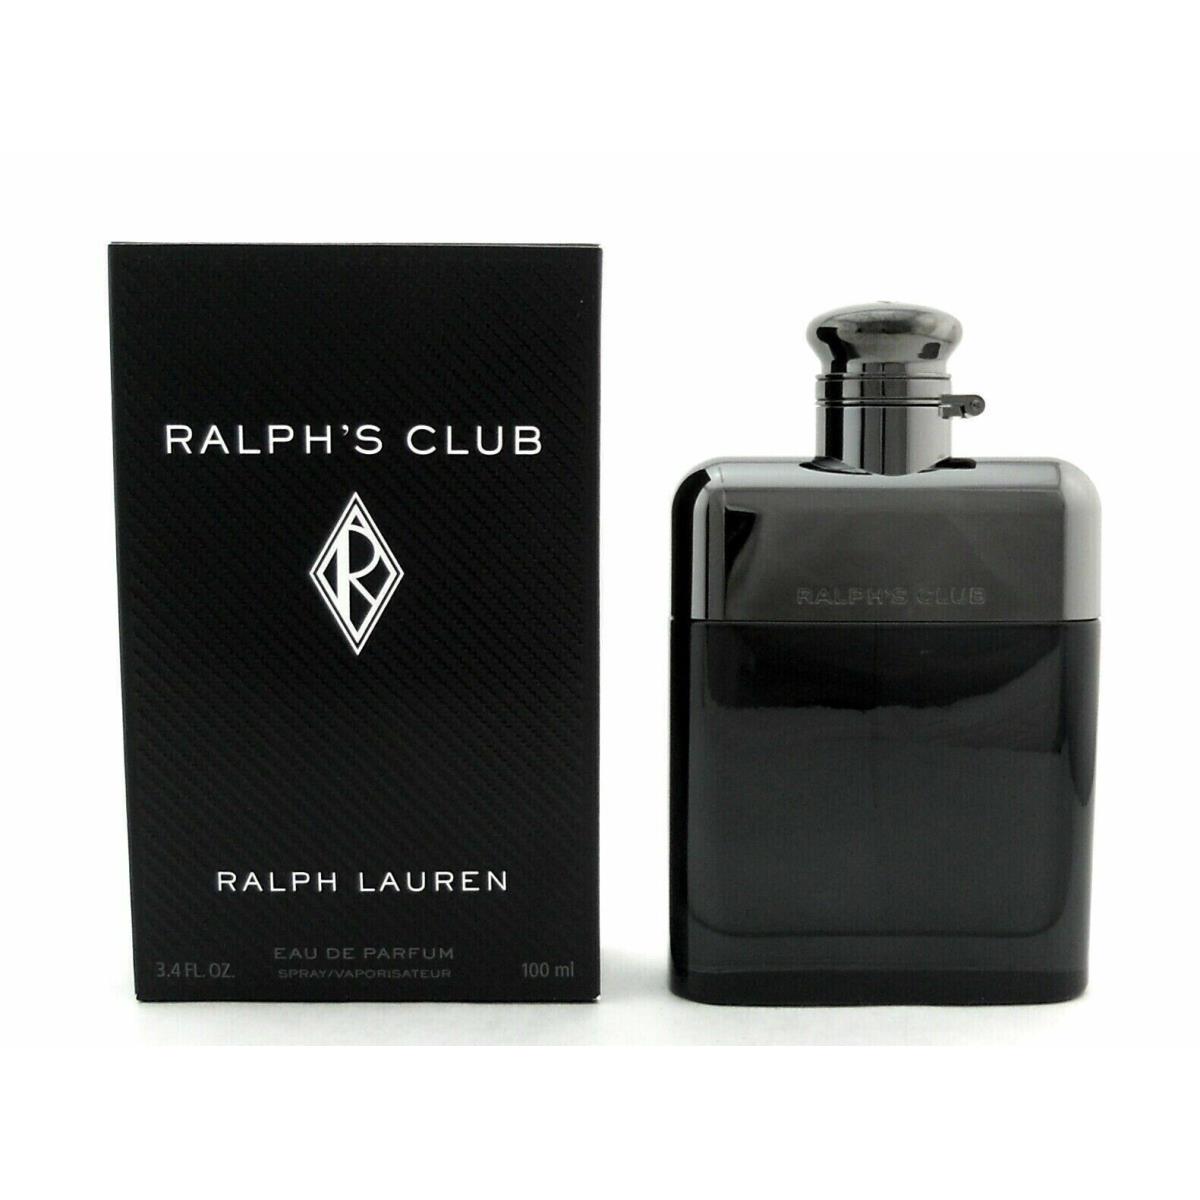 Ralph`s Club Cologne Perfume Ralph Lauren 3.4 Oz 100 ml Edp Eau De Parfum Spray